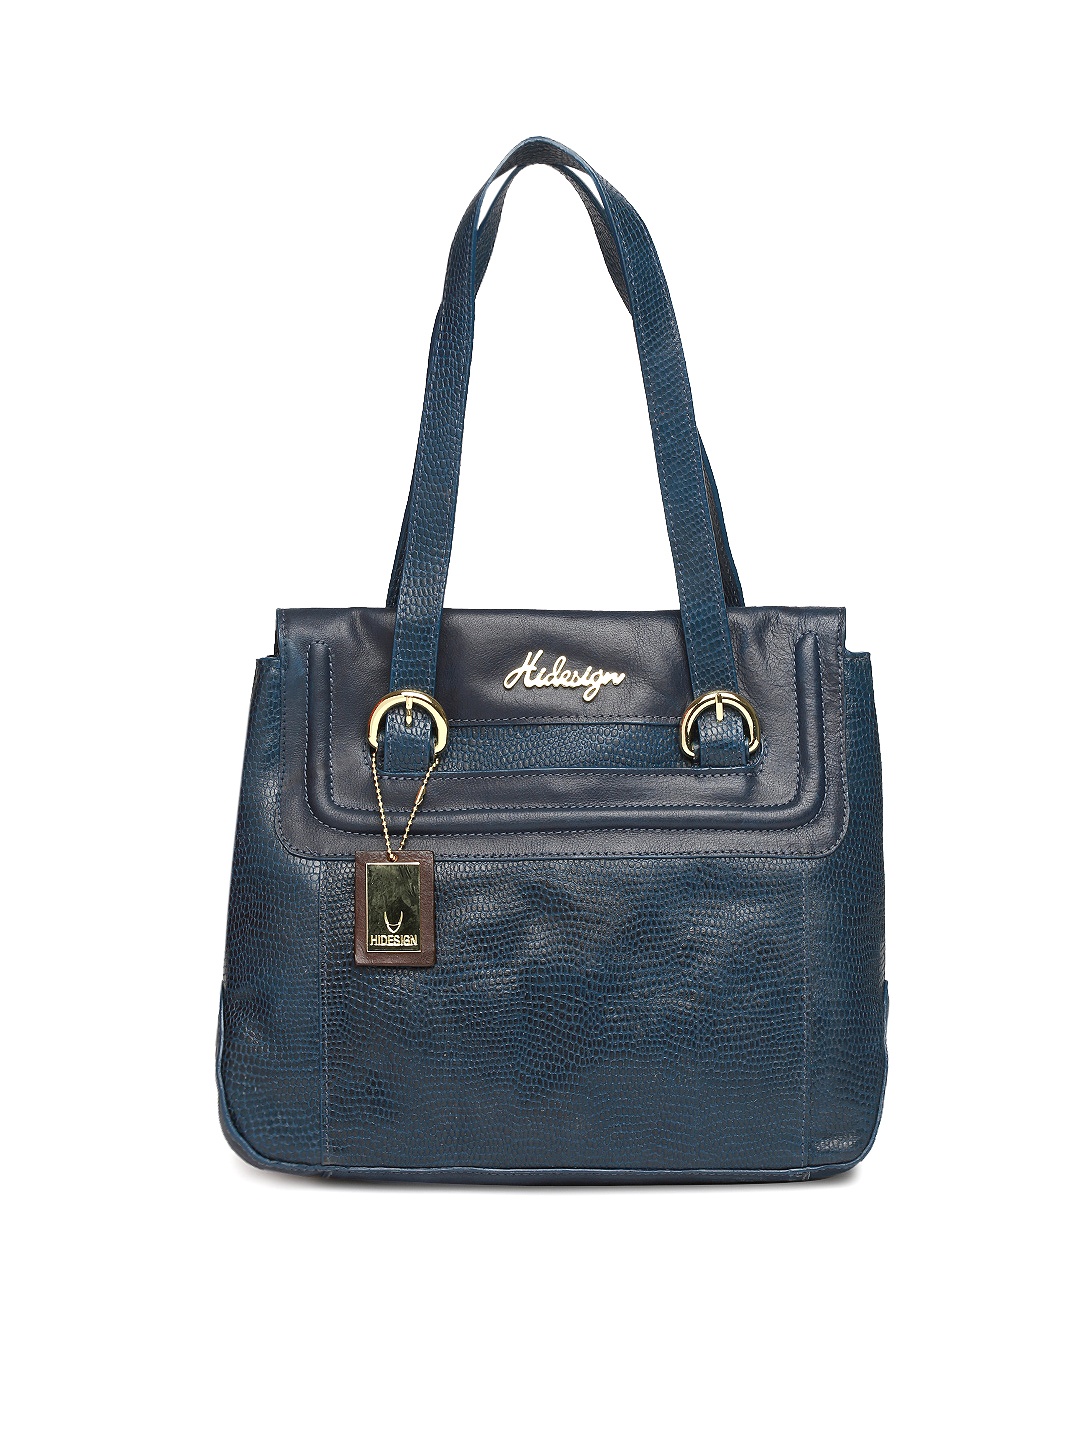 Myntra Hidesign Navy Leather Handbag 814947 | Buy Myntra Hidesign Handbags at best price online 